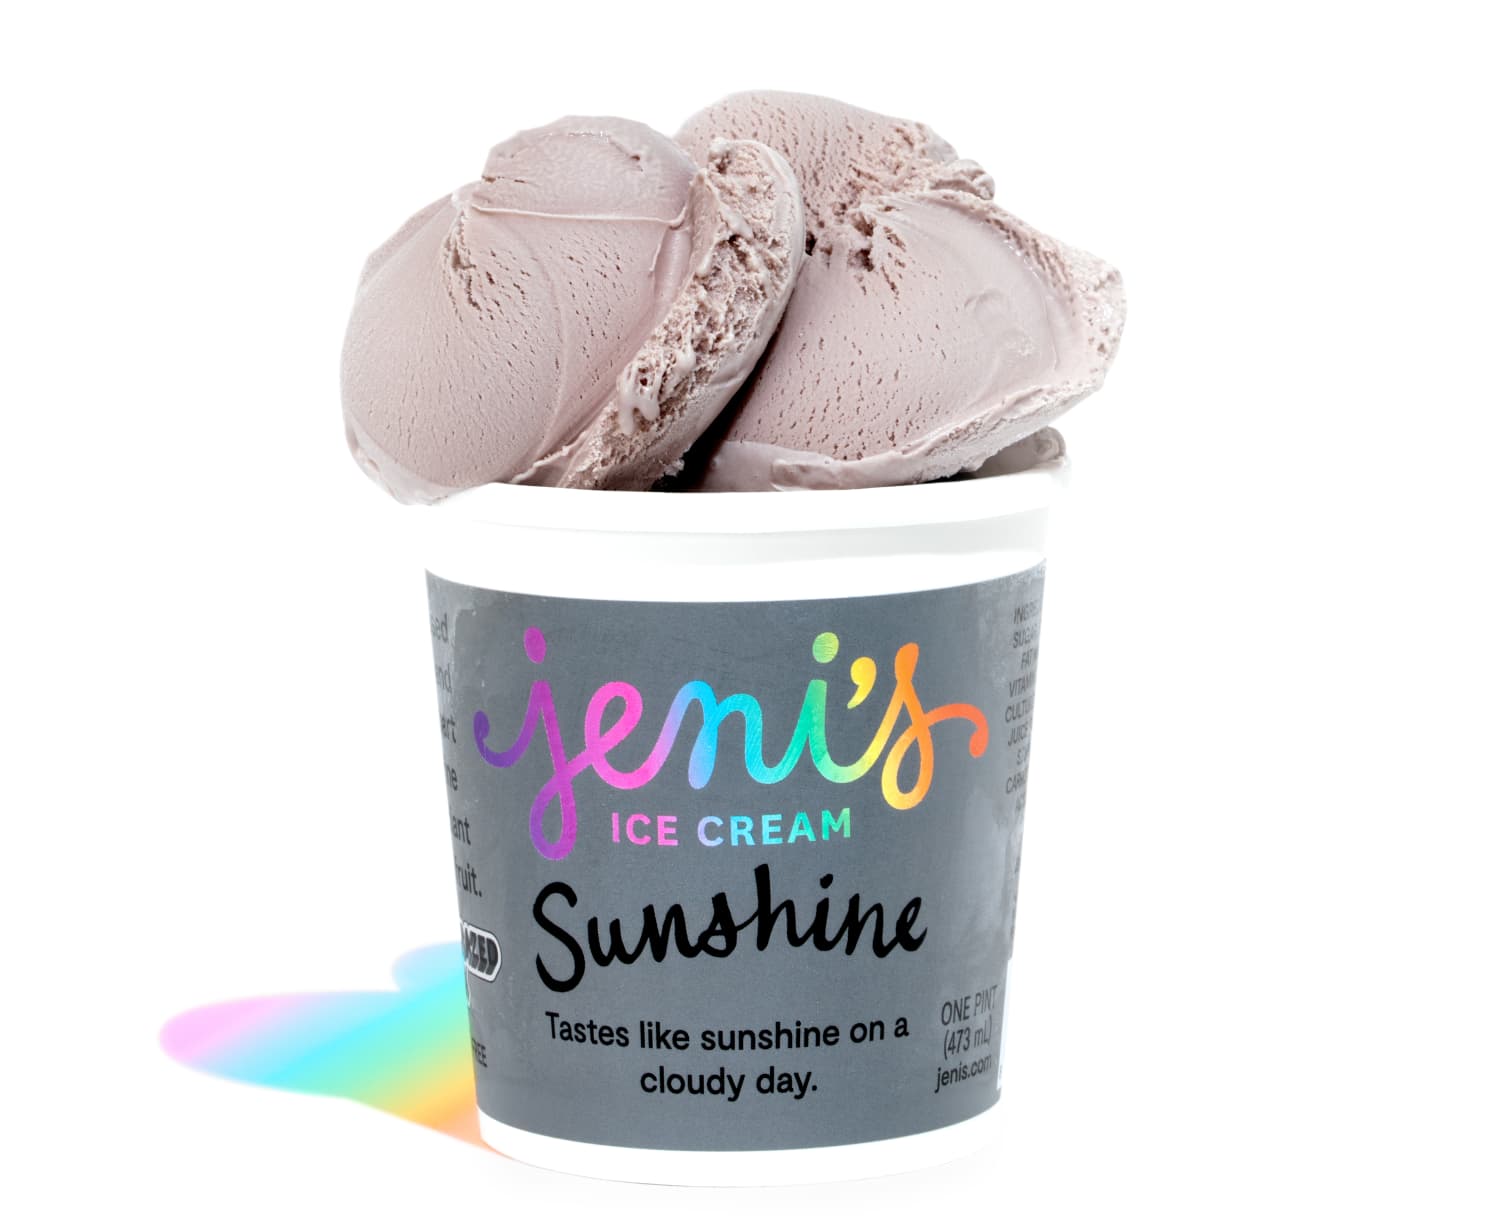 Jeni's New Gray Ice Cream Actually Tastes Like 'Sunshine on a Cloudy